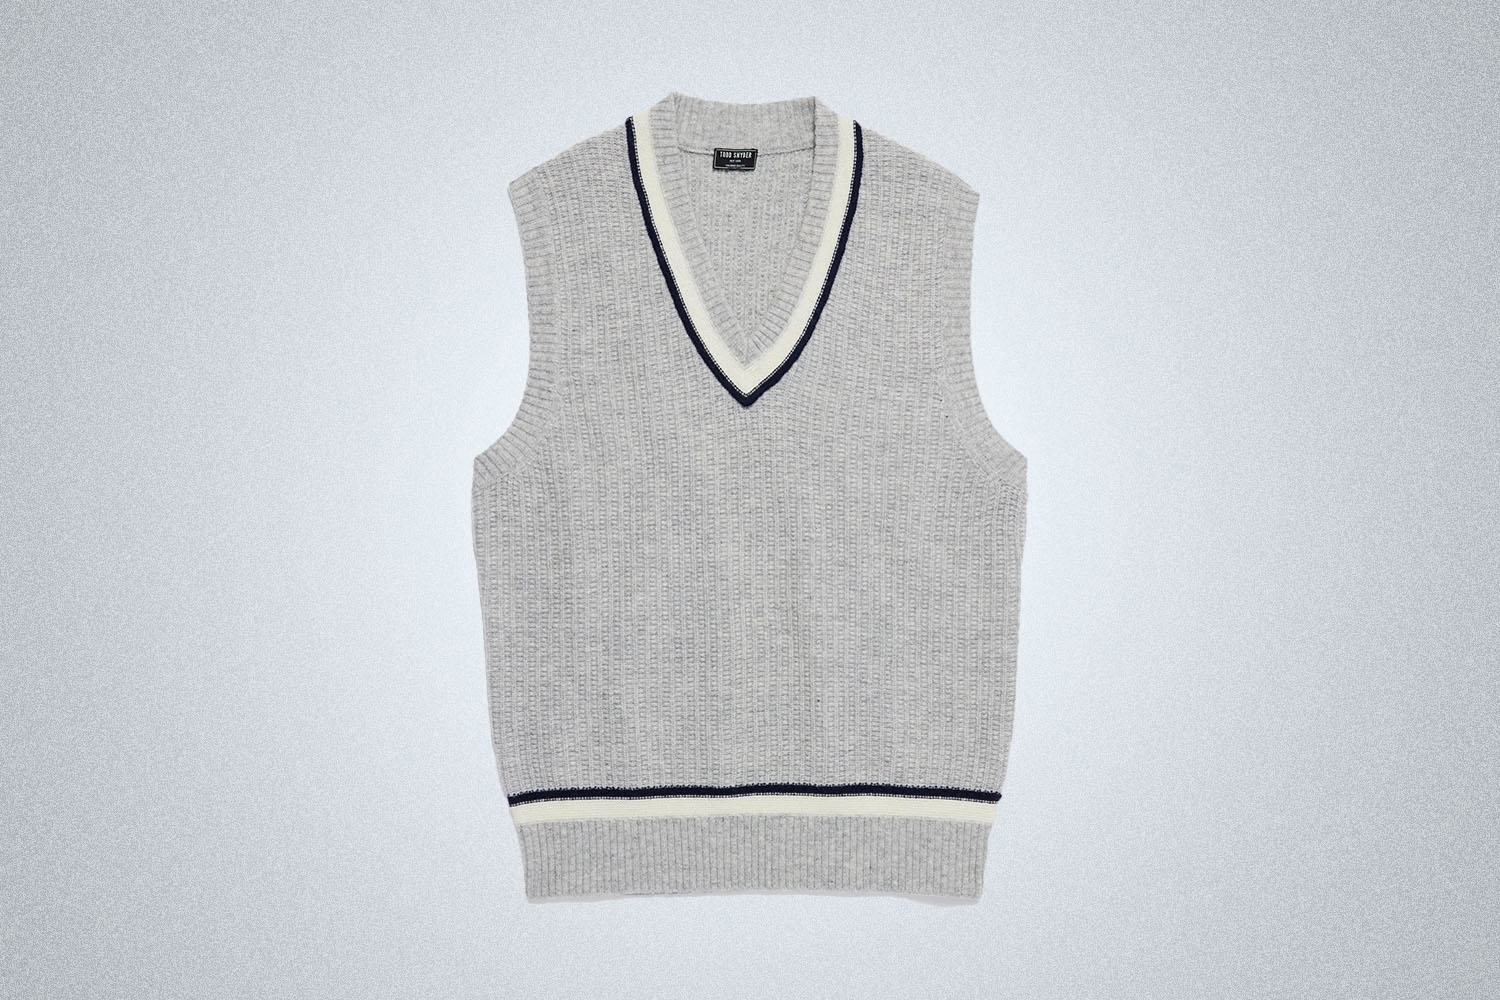 a sweater vest on a grey background